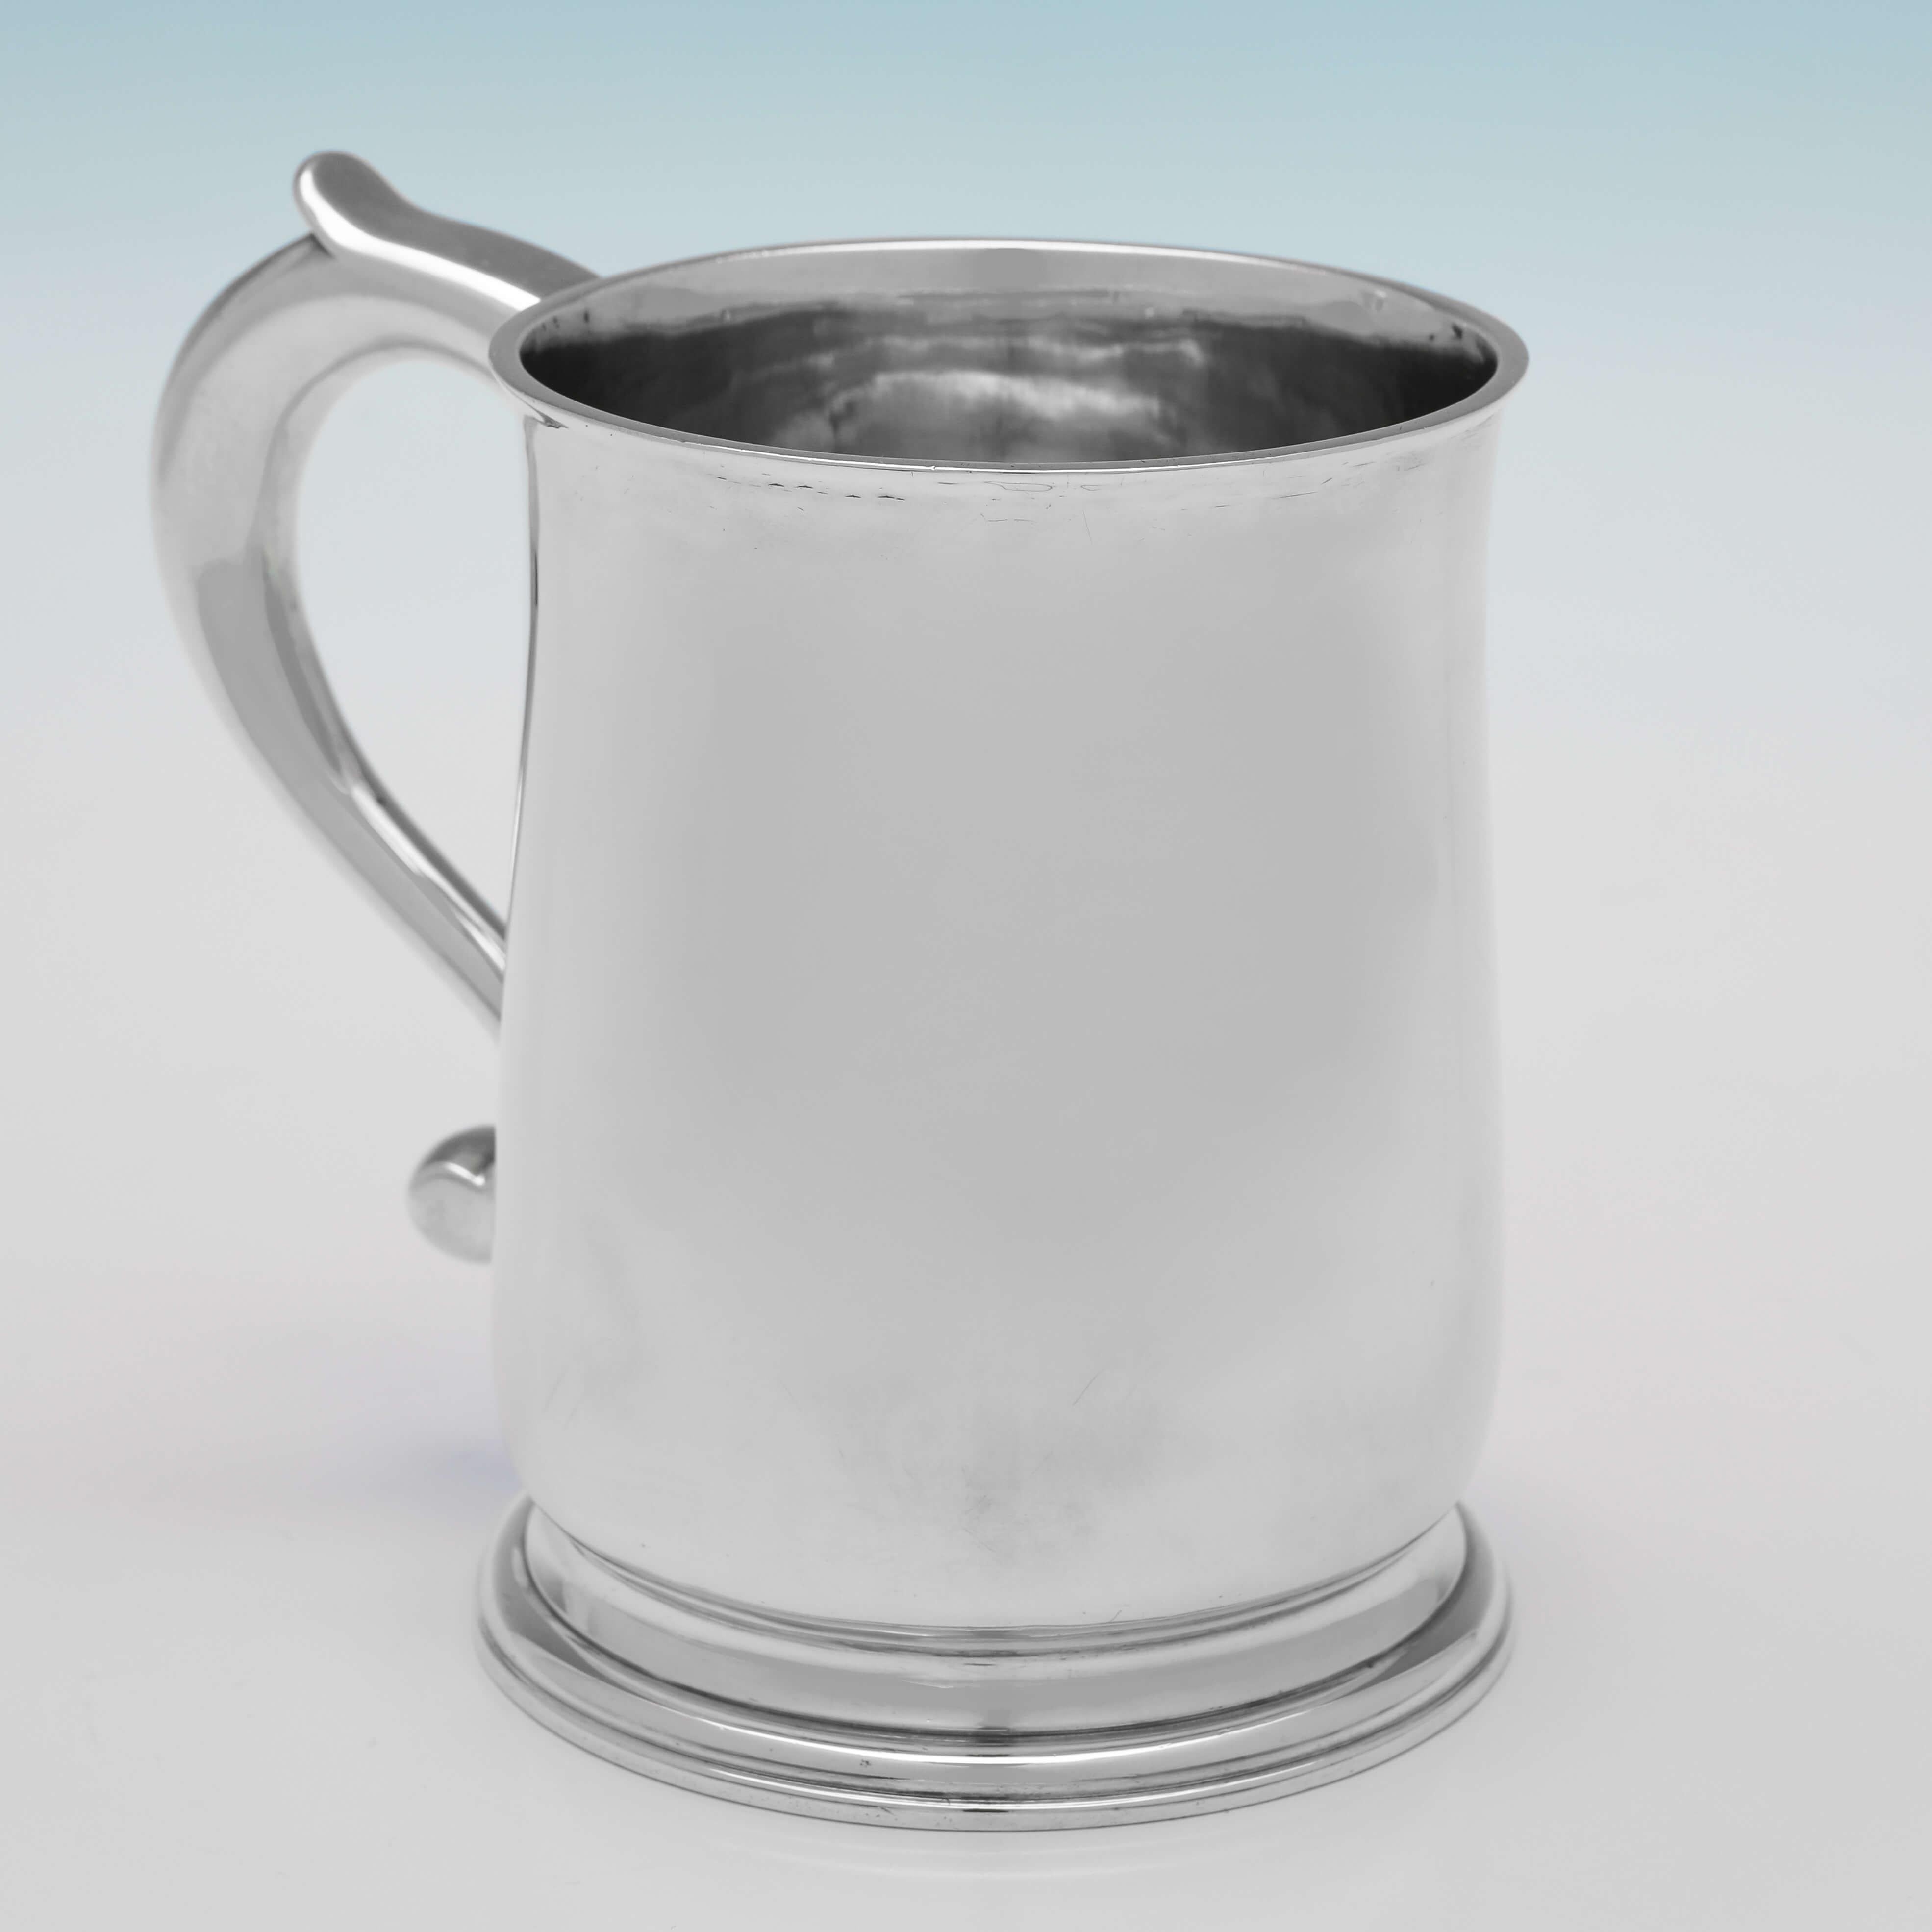 Hallmarked in London in 1935 by C. J. Vander, this handsome, Sterling Silver Mug, is an elegant art deco representation of a traditional beer mug. 

The mug measures 4.5